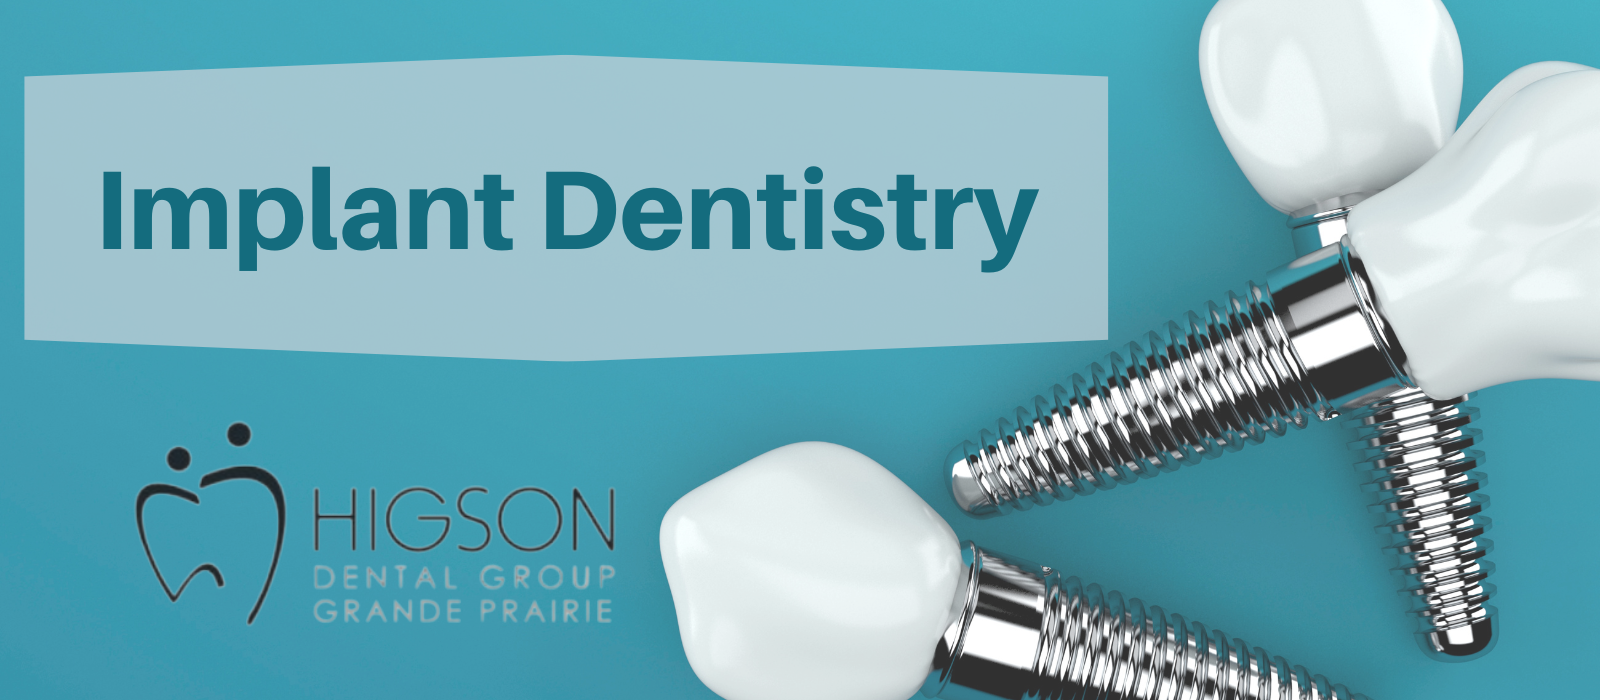 Higson Dental Implant Dentistry